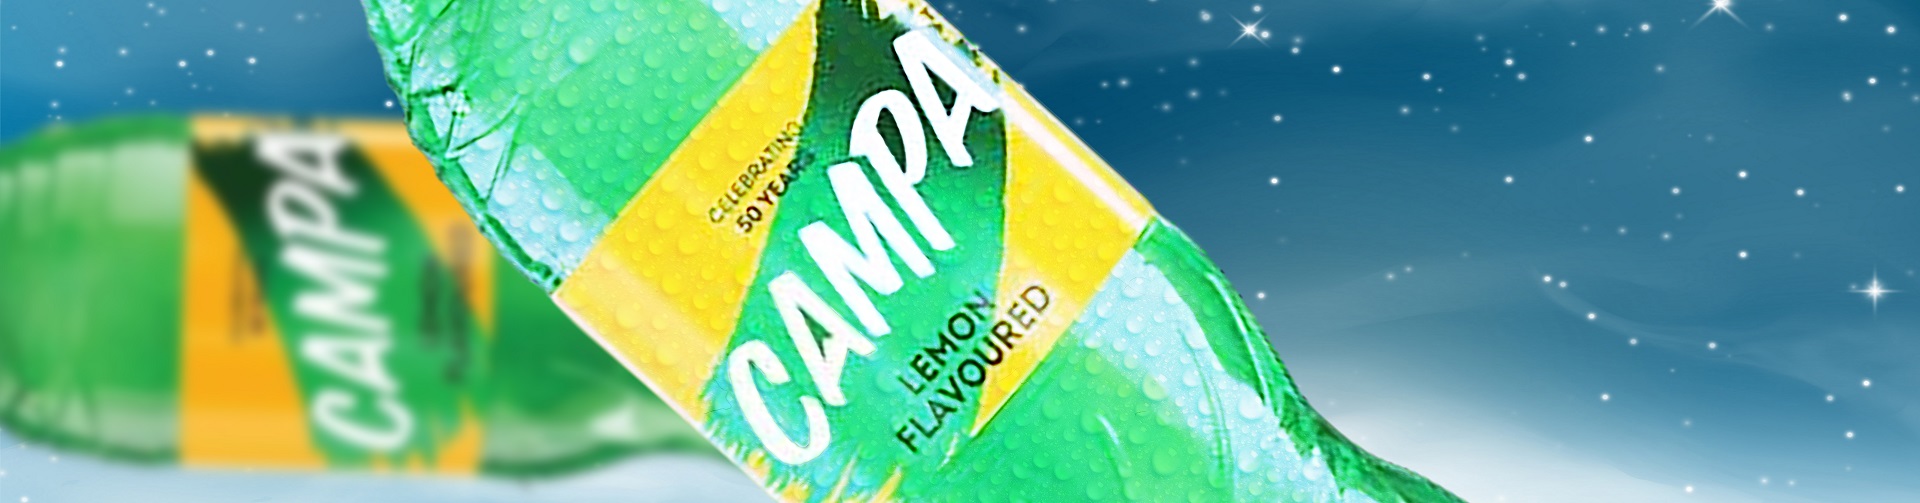 Promotional image for Campa Lemon